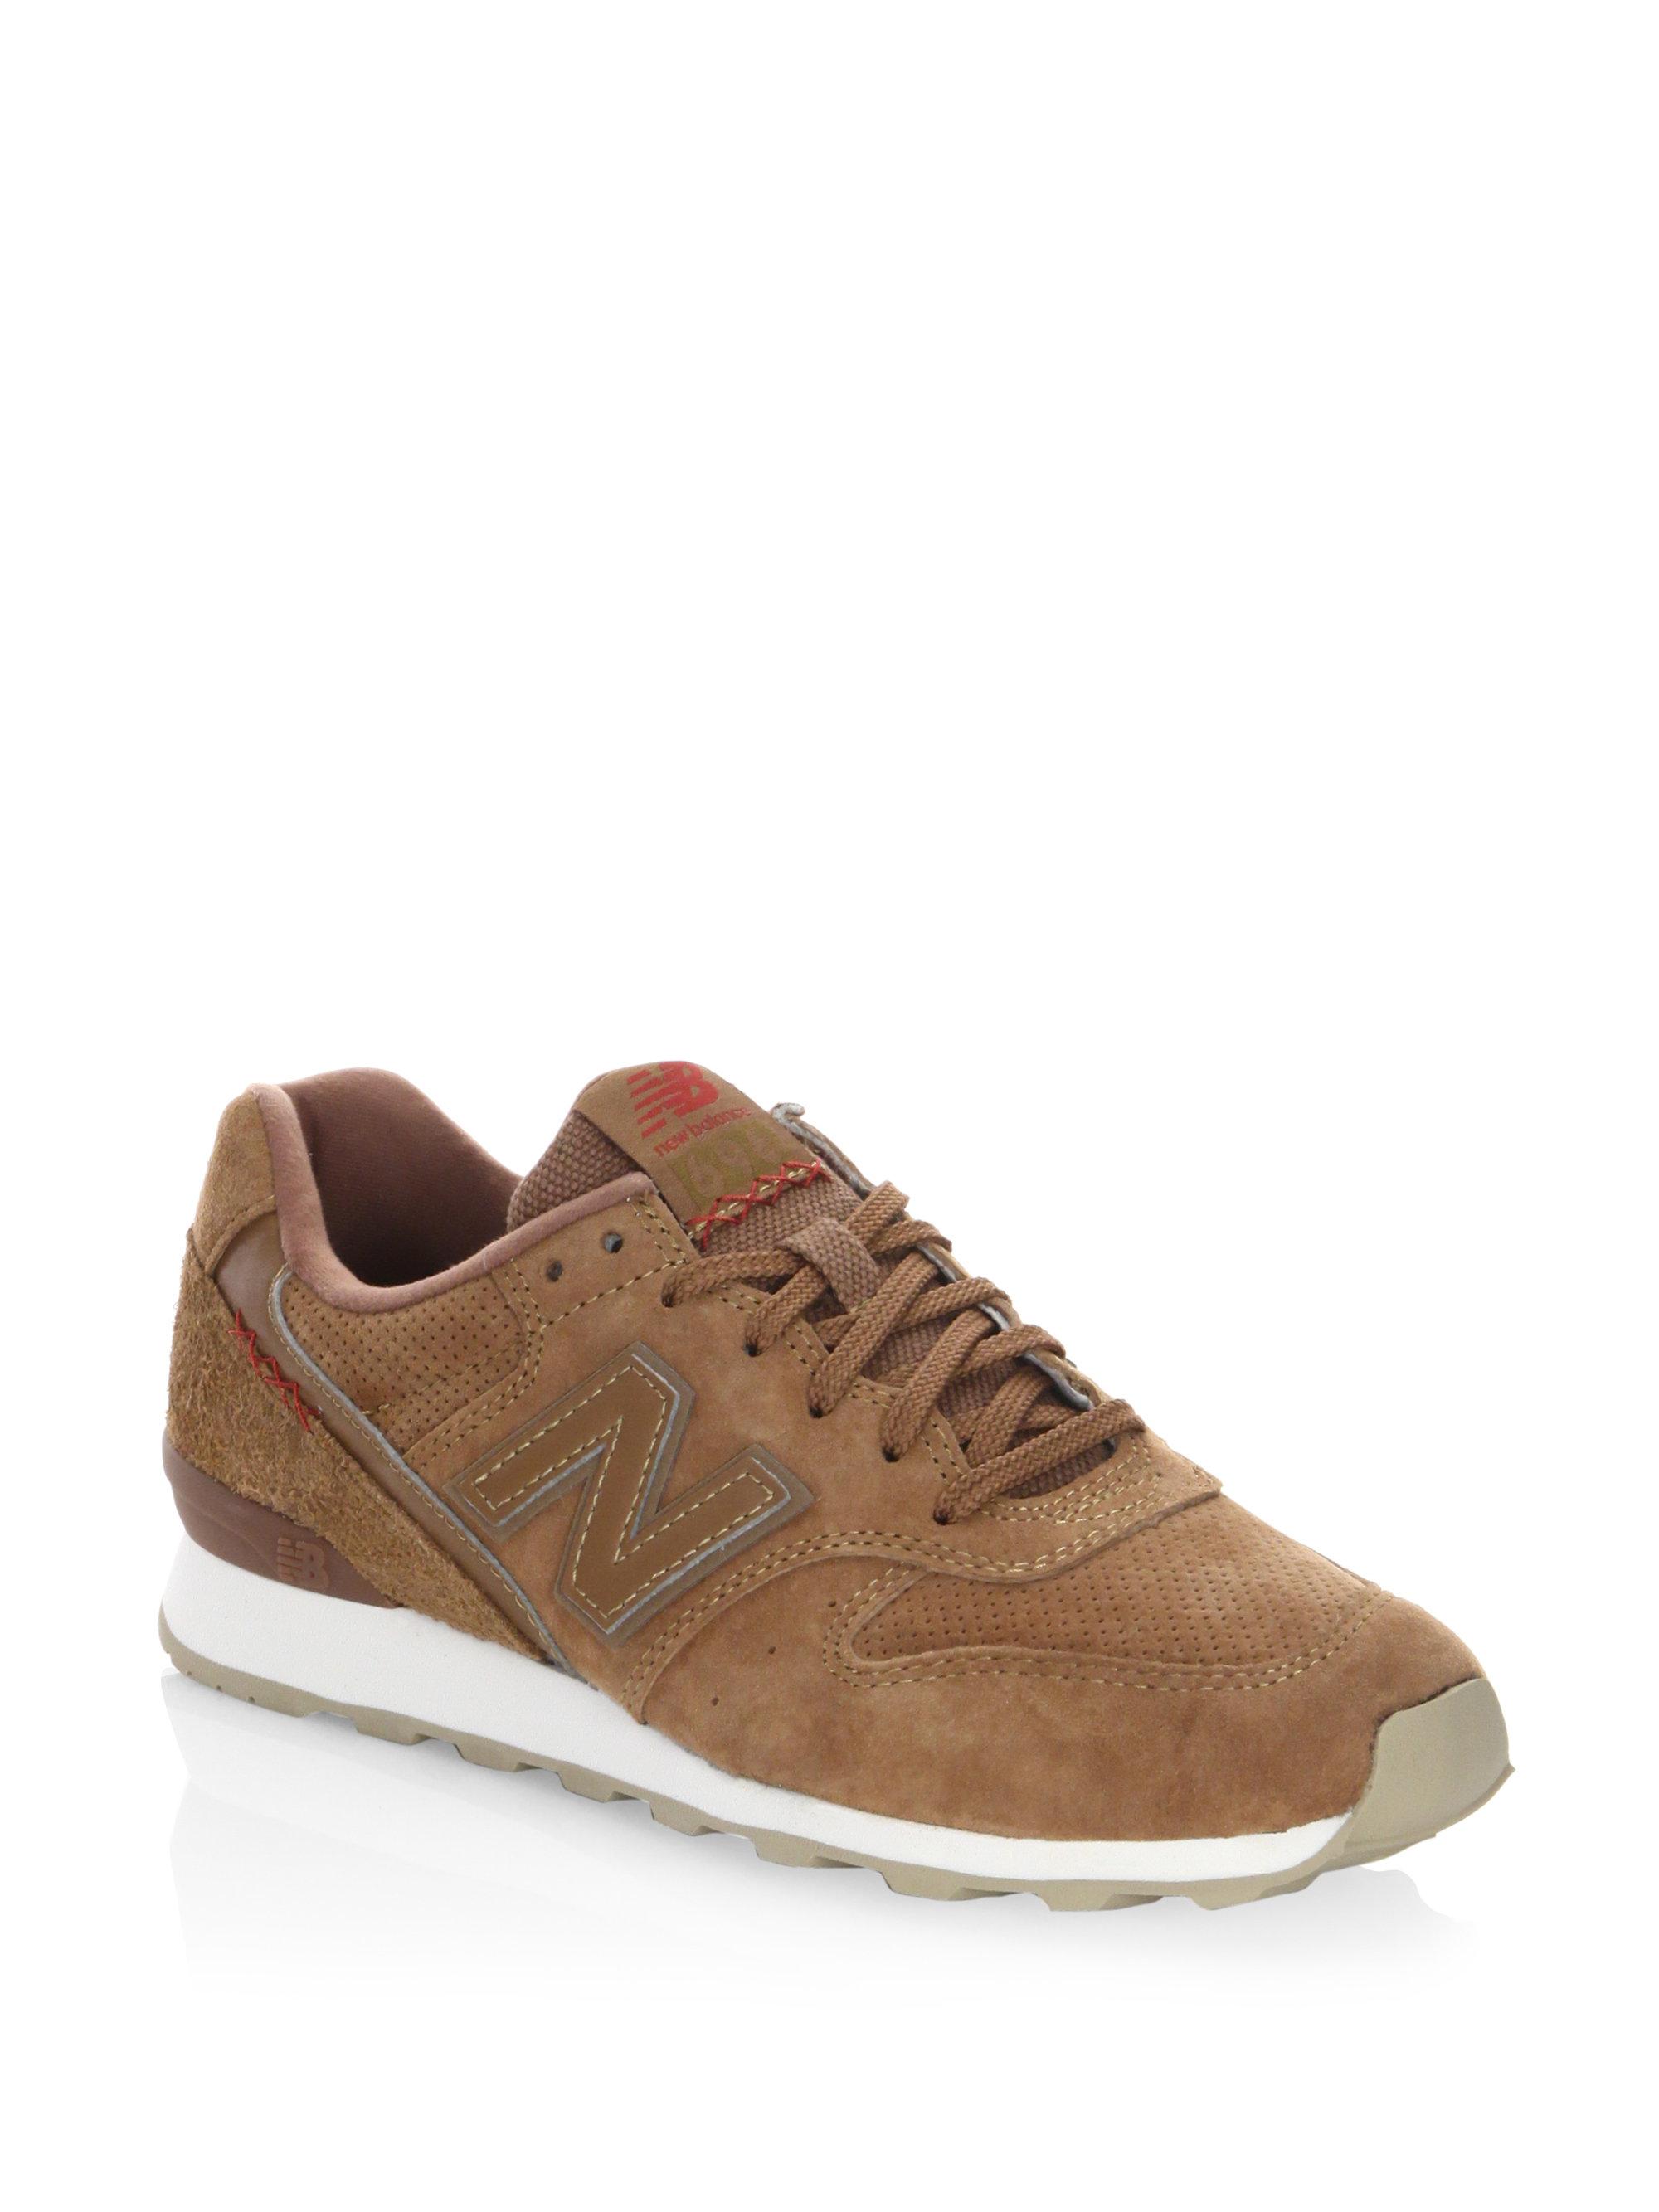 New Balance 696 Suede Sneakers in Cinnamon (Brown) for Men - Lyst